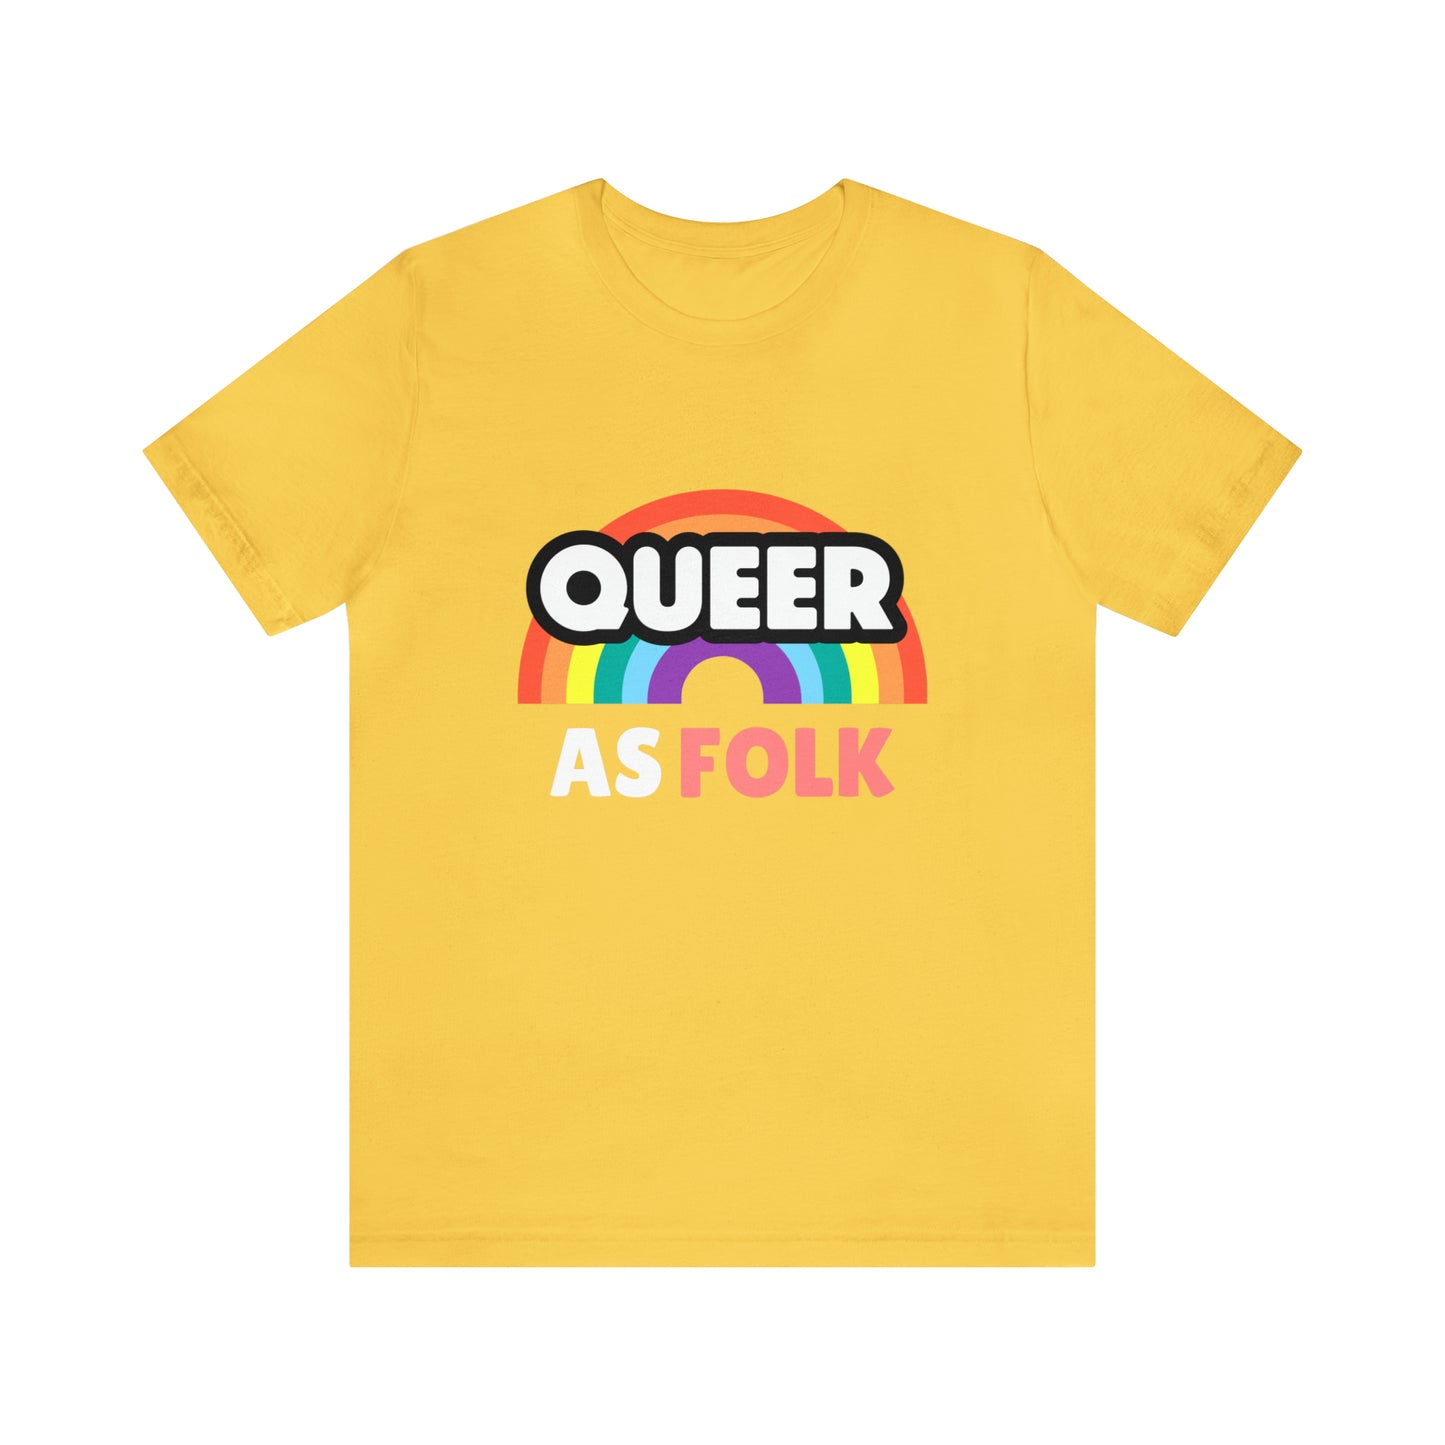 Queer As Folk - Unisex T-Shirt